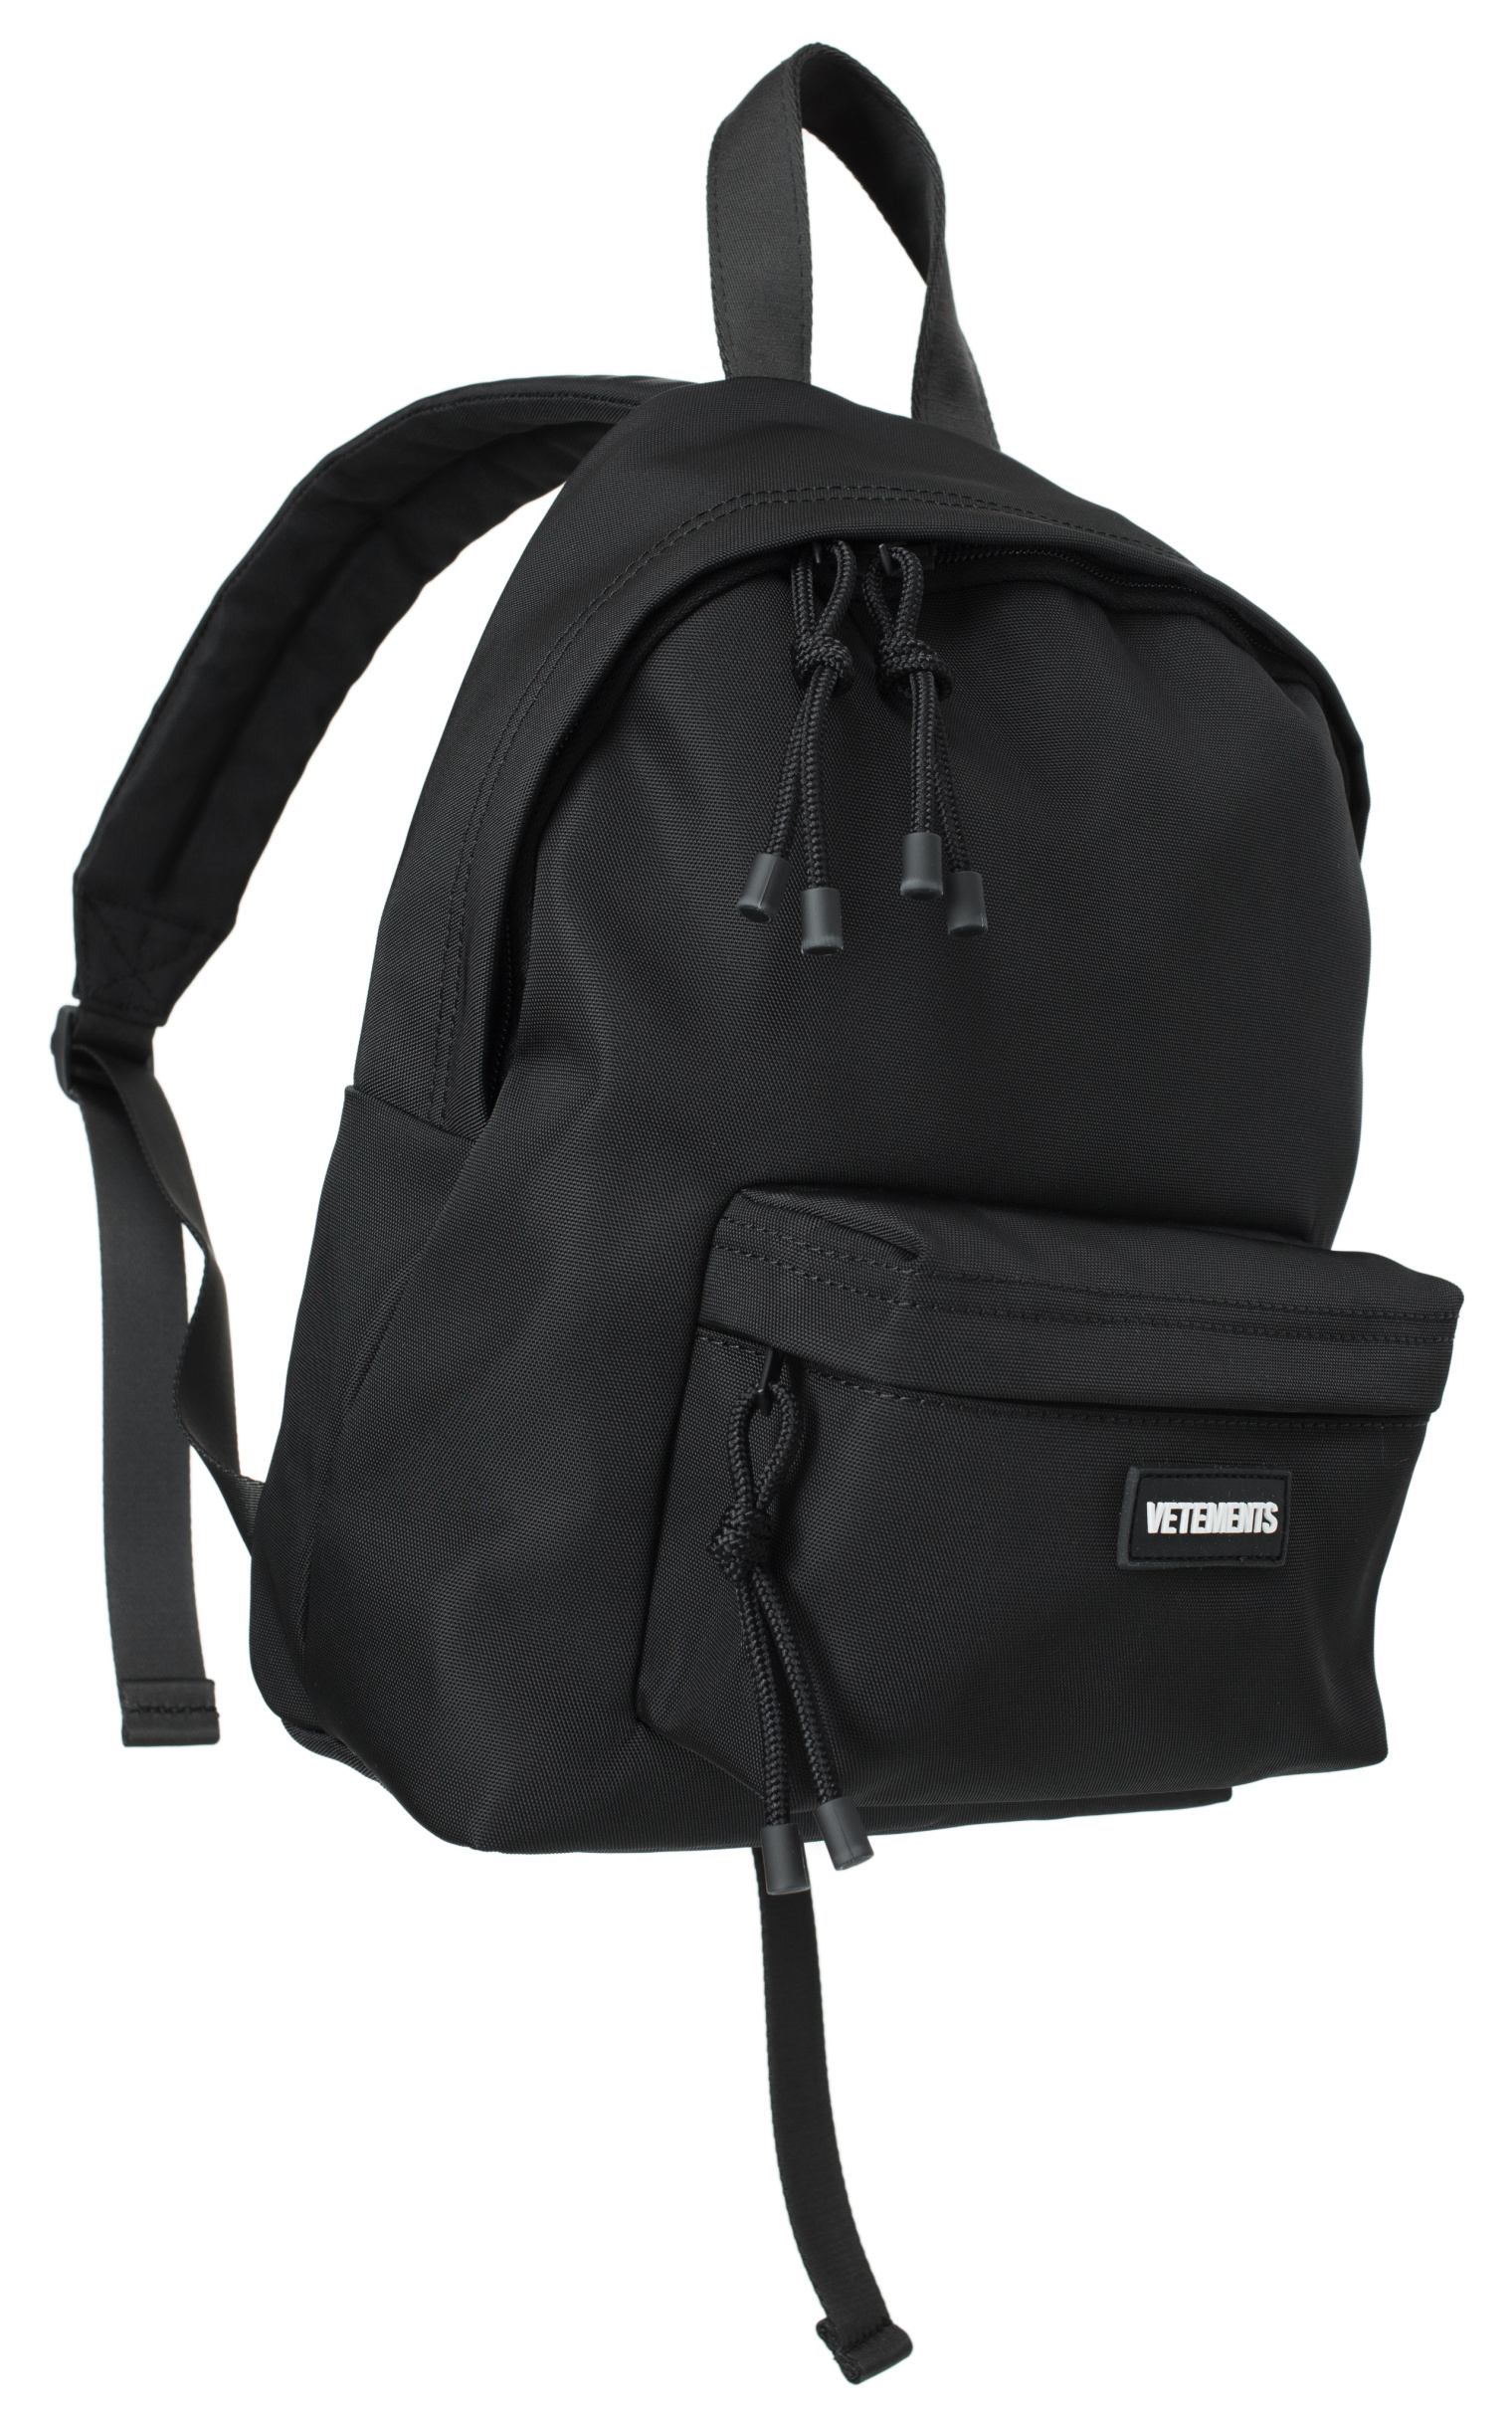 Vetements x Eastpak Backpack Canvas Black Collaboration Unisex Nylon  backpack | eBay